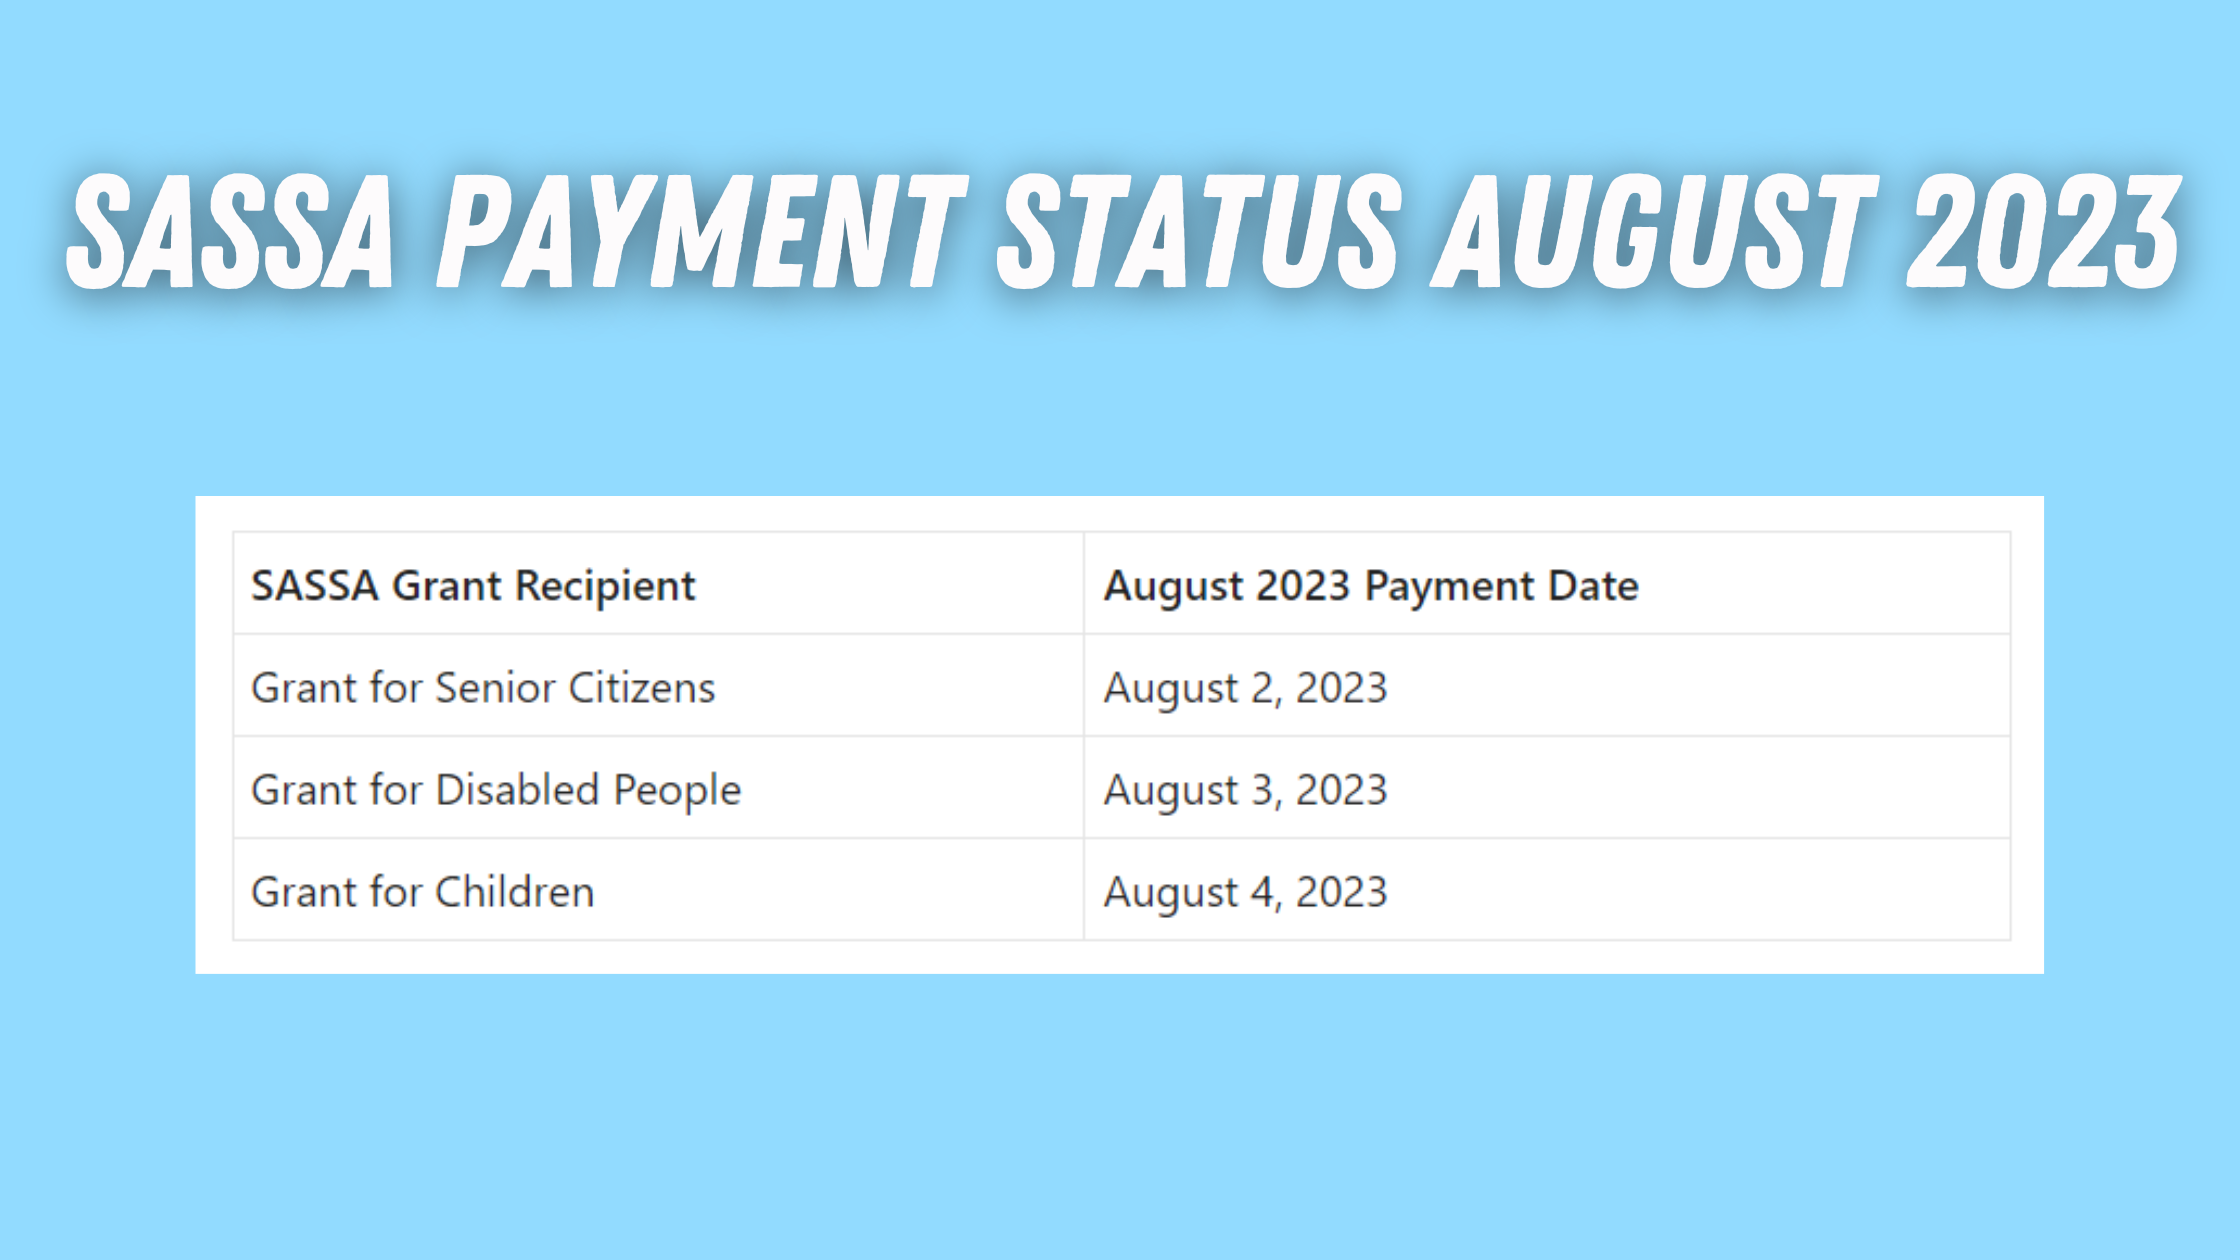 SASSA PAYMENT STATUS AUGUST 2023